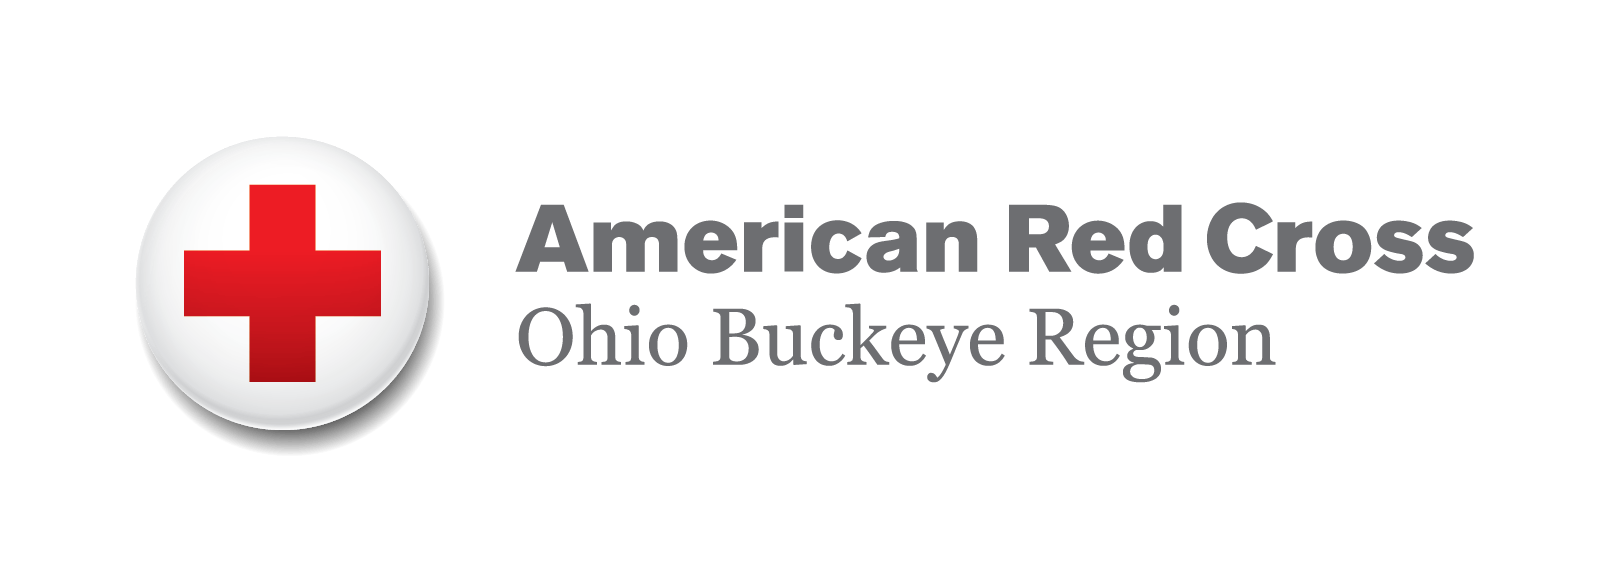 American Red Cross Colorado Logo - Ohio Buckeye Region